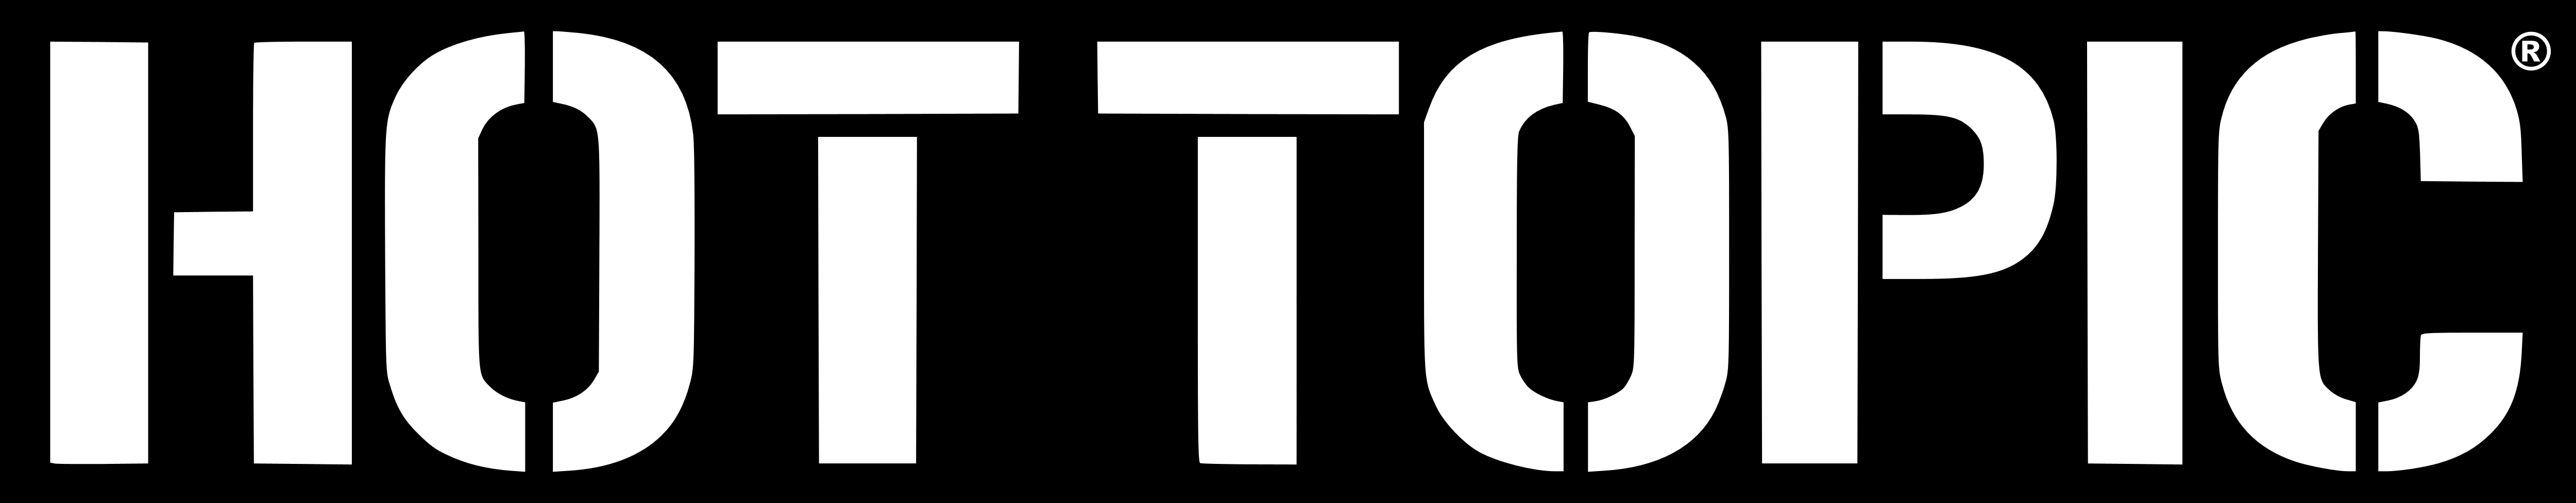 Hot Topic logo black